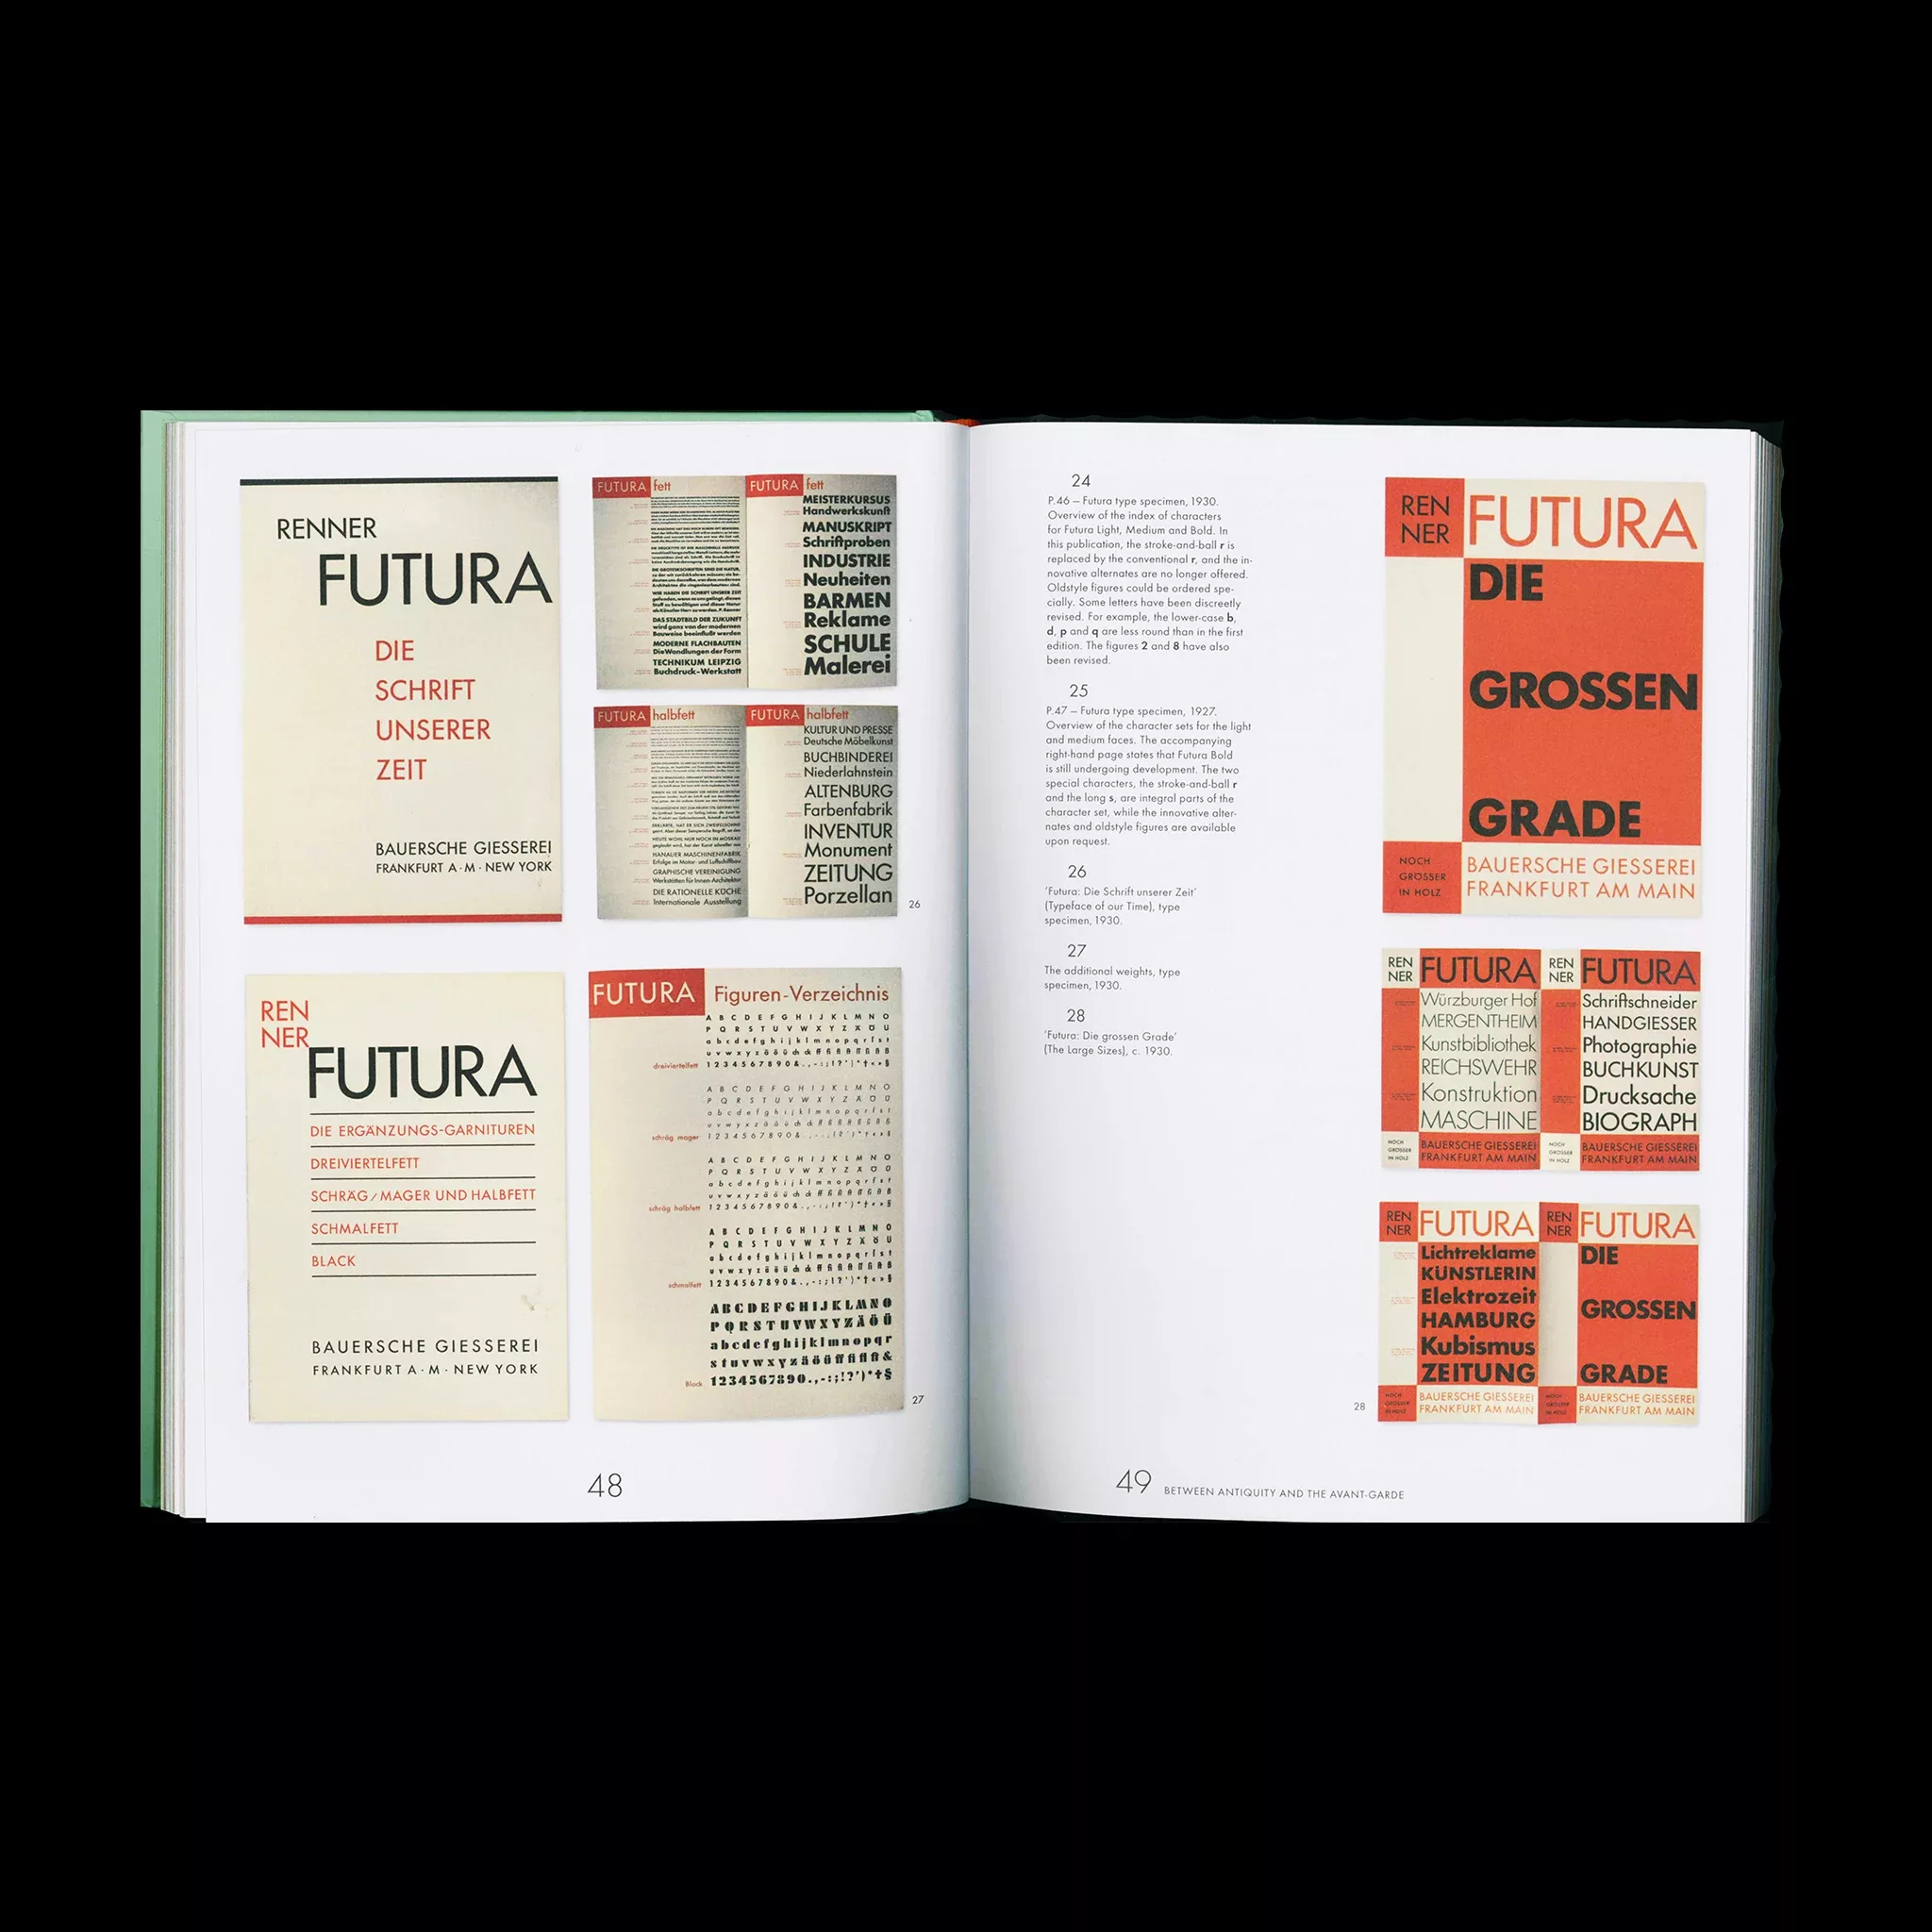 Futura: The Typeface, Laurence King Publishing, 2017